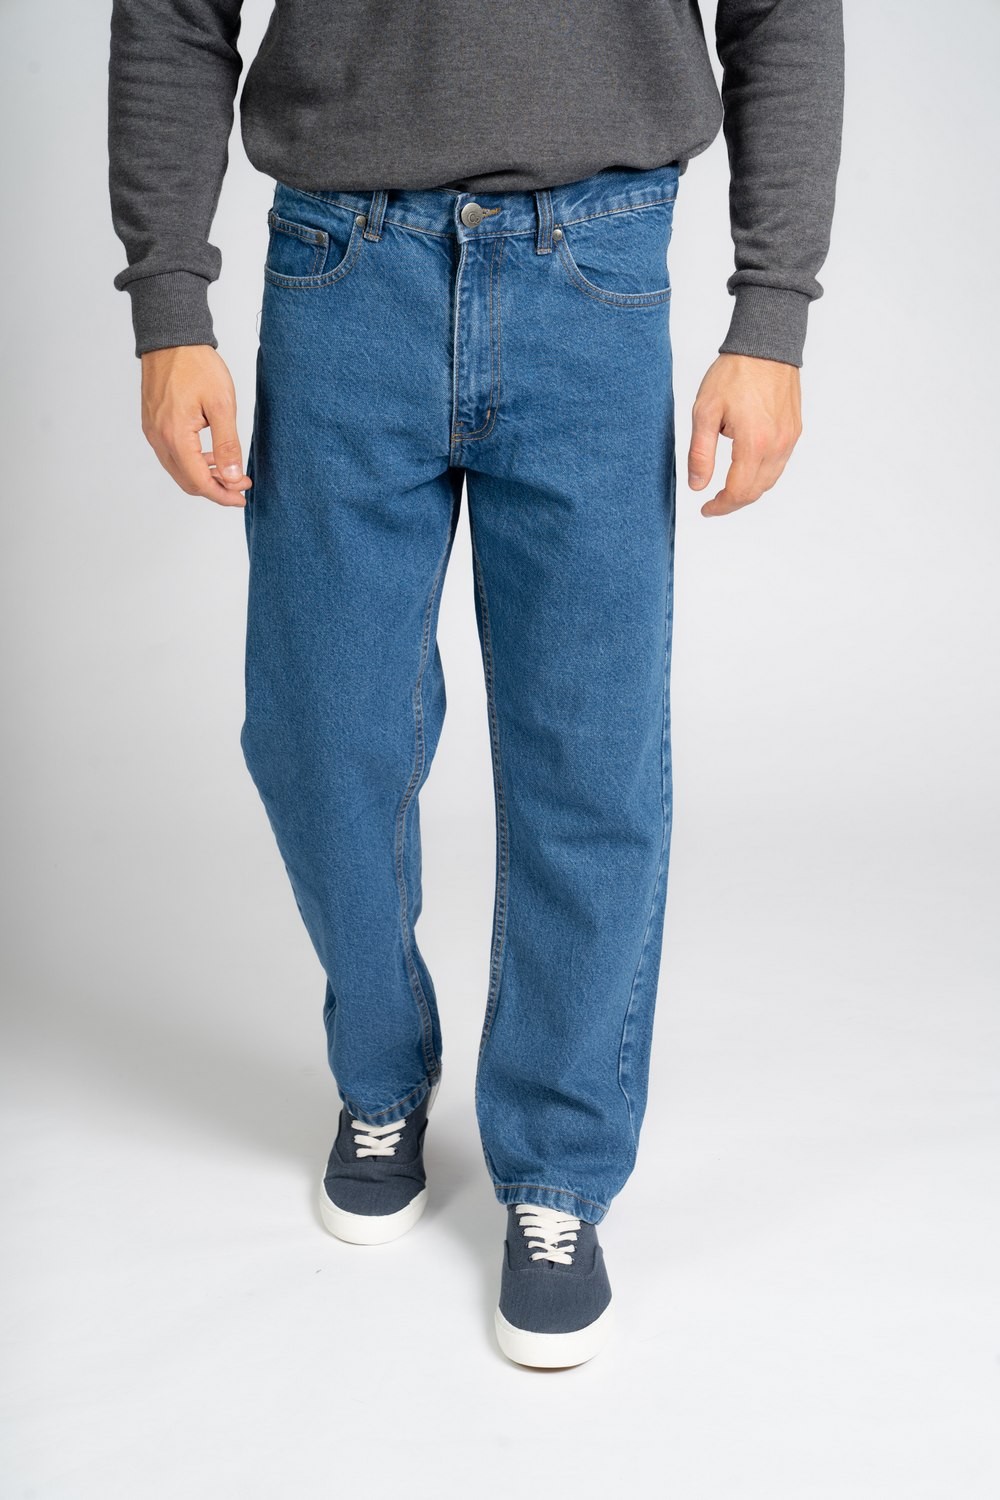 Carabou Jeans ACJ waist size 36S